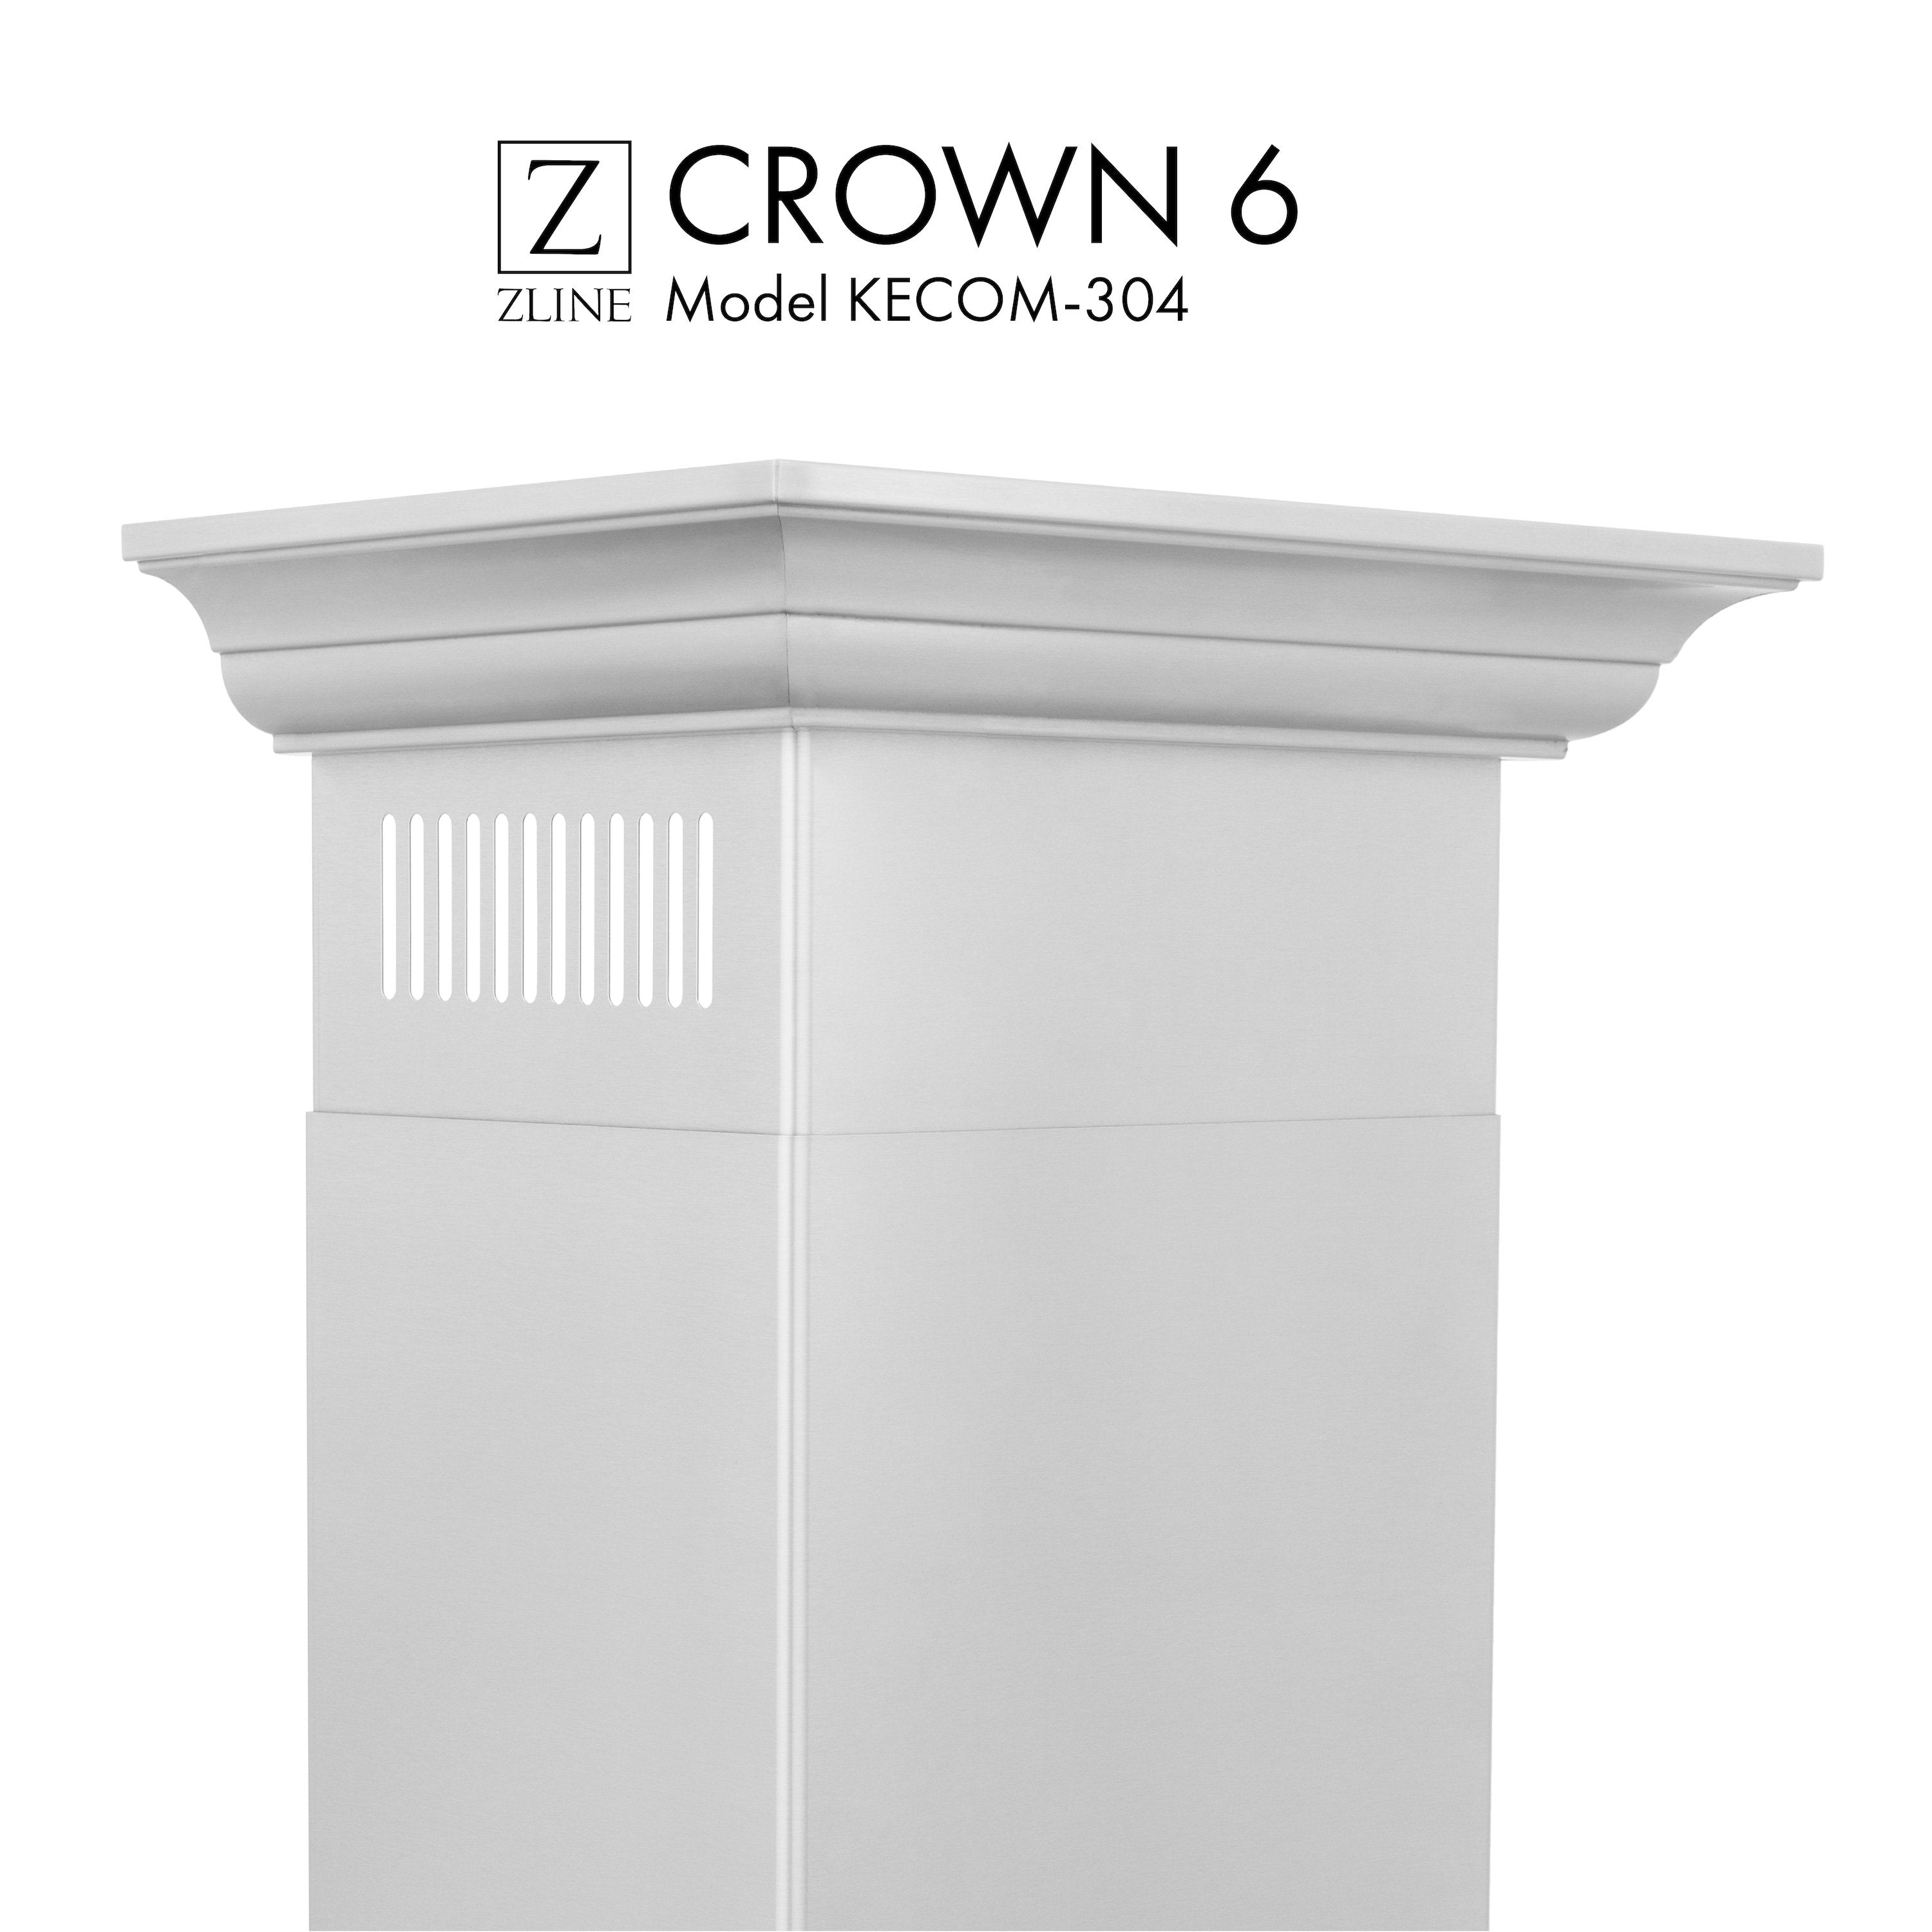 ZLINE Crown Molding Profile 6 for Wall Mount Range Hood (CM6-KECOM-304)